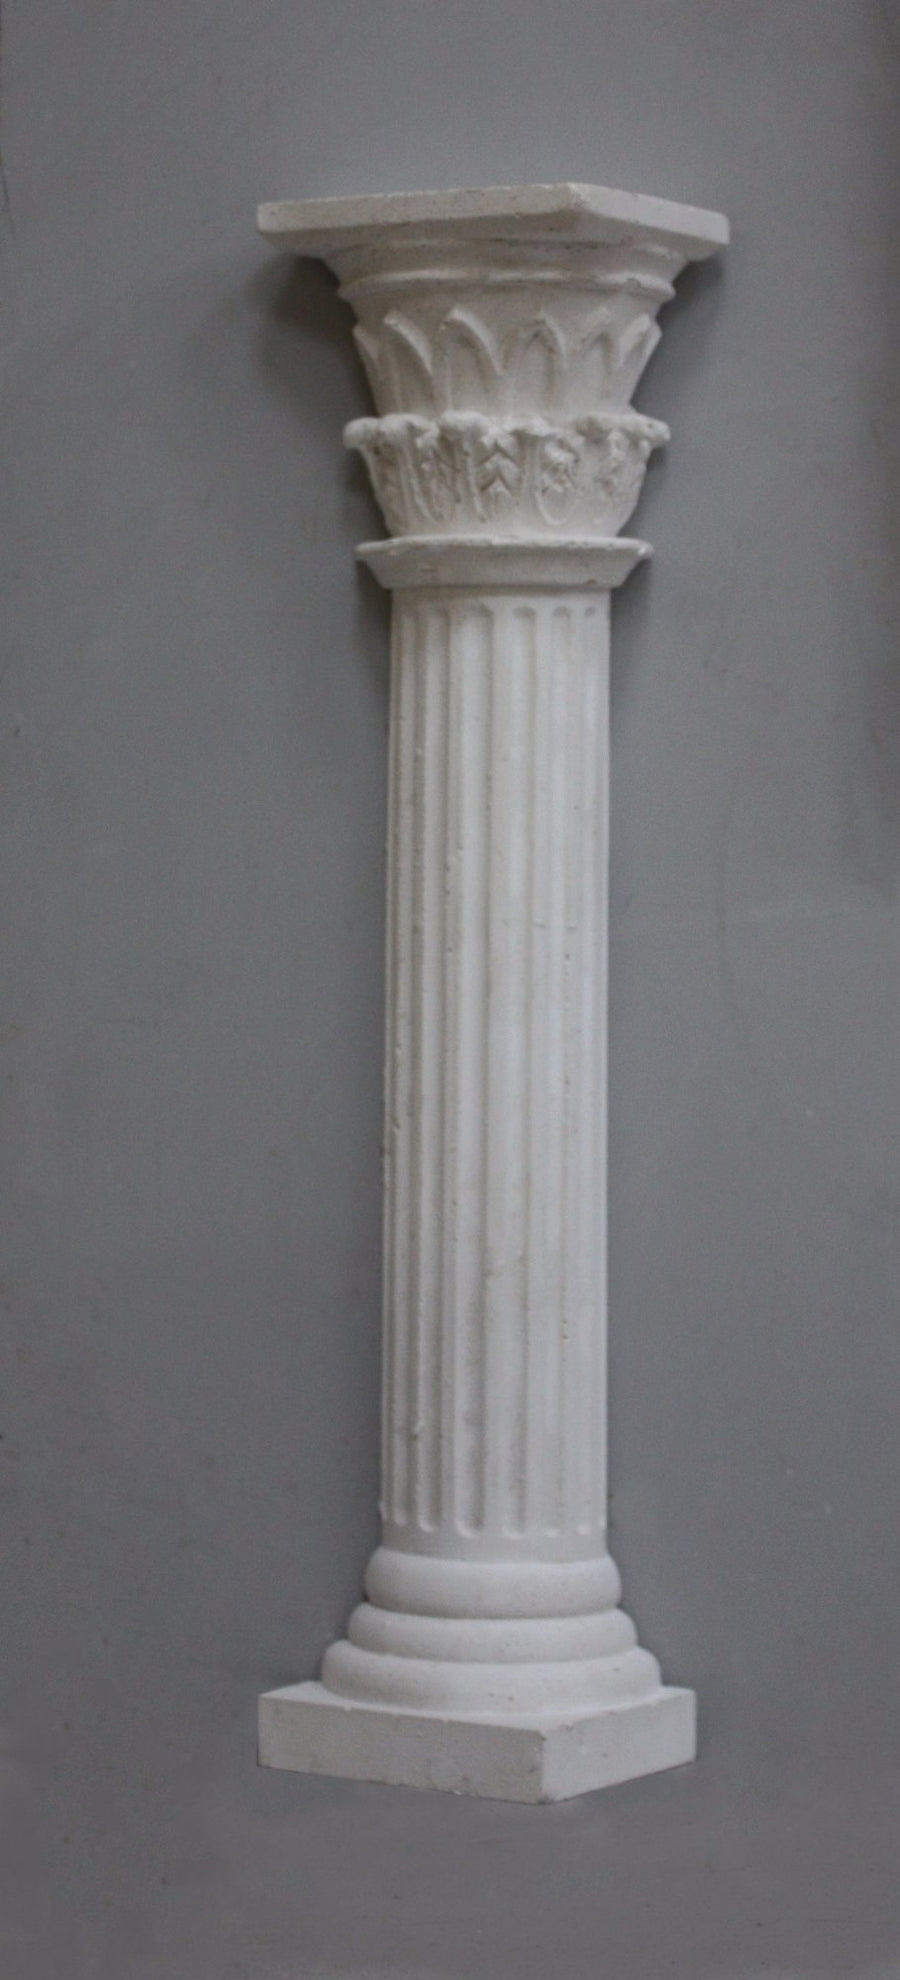 Photo of plaster cast sculpture of Greek half column on a grey background